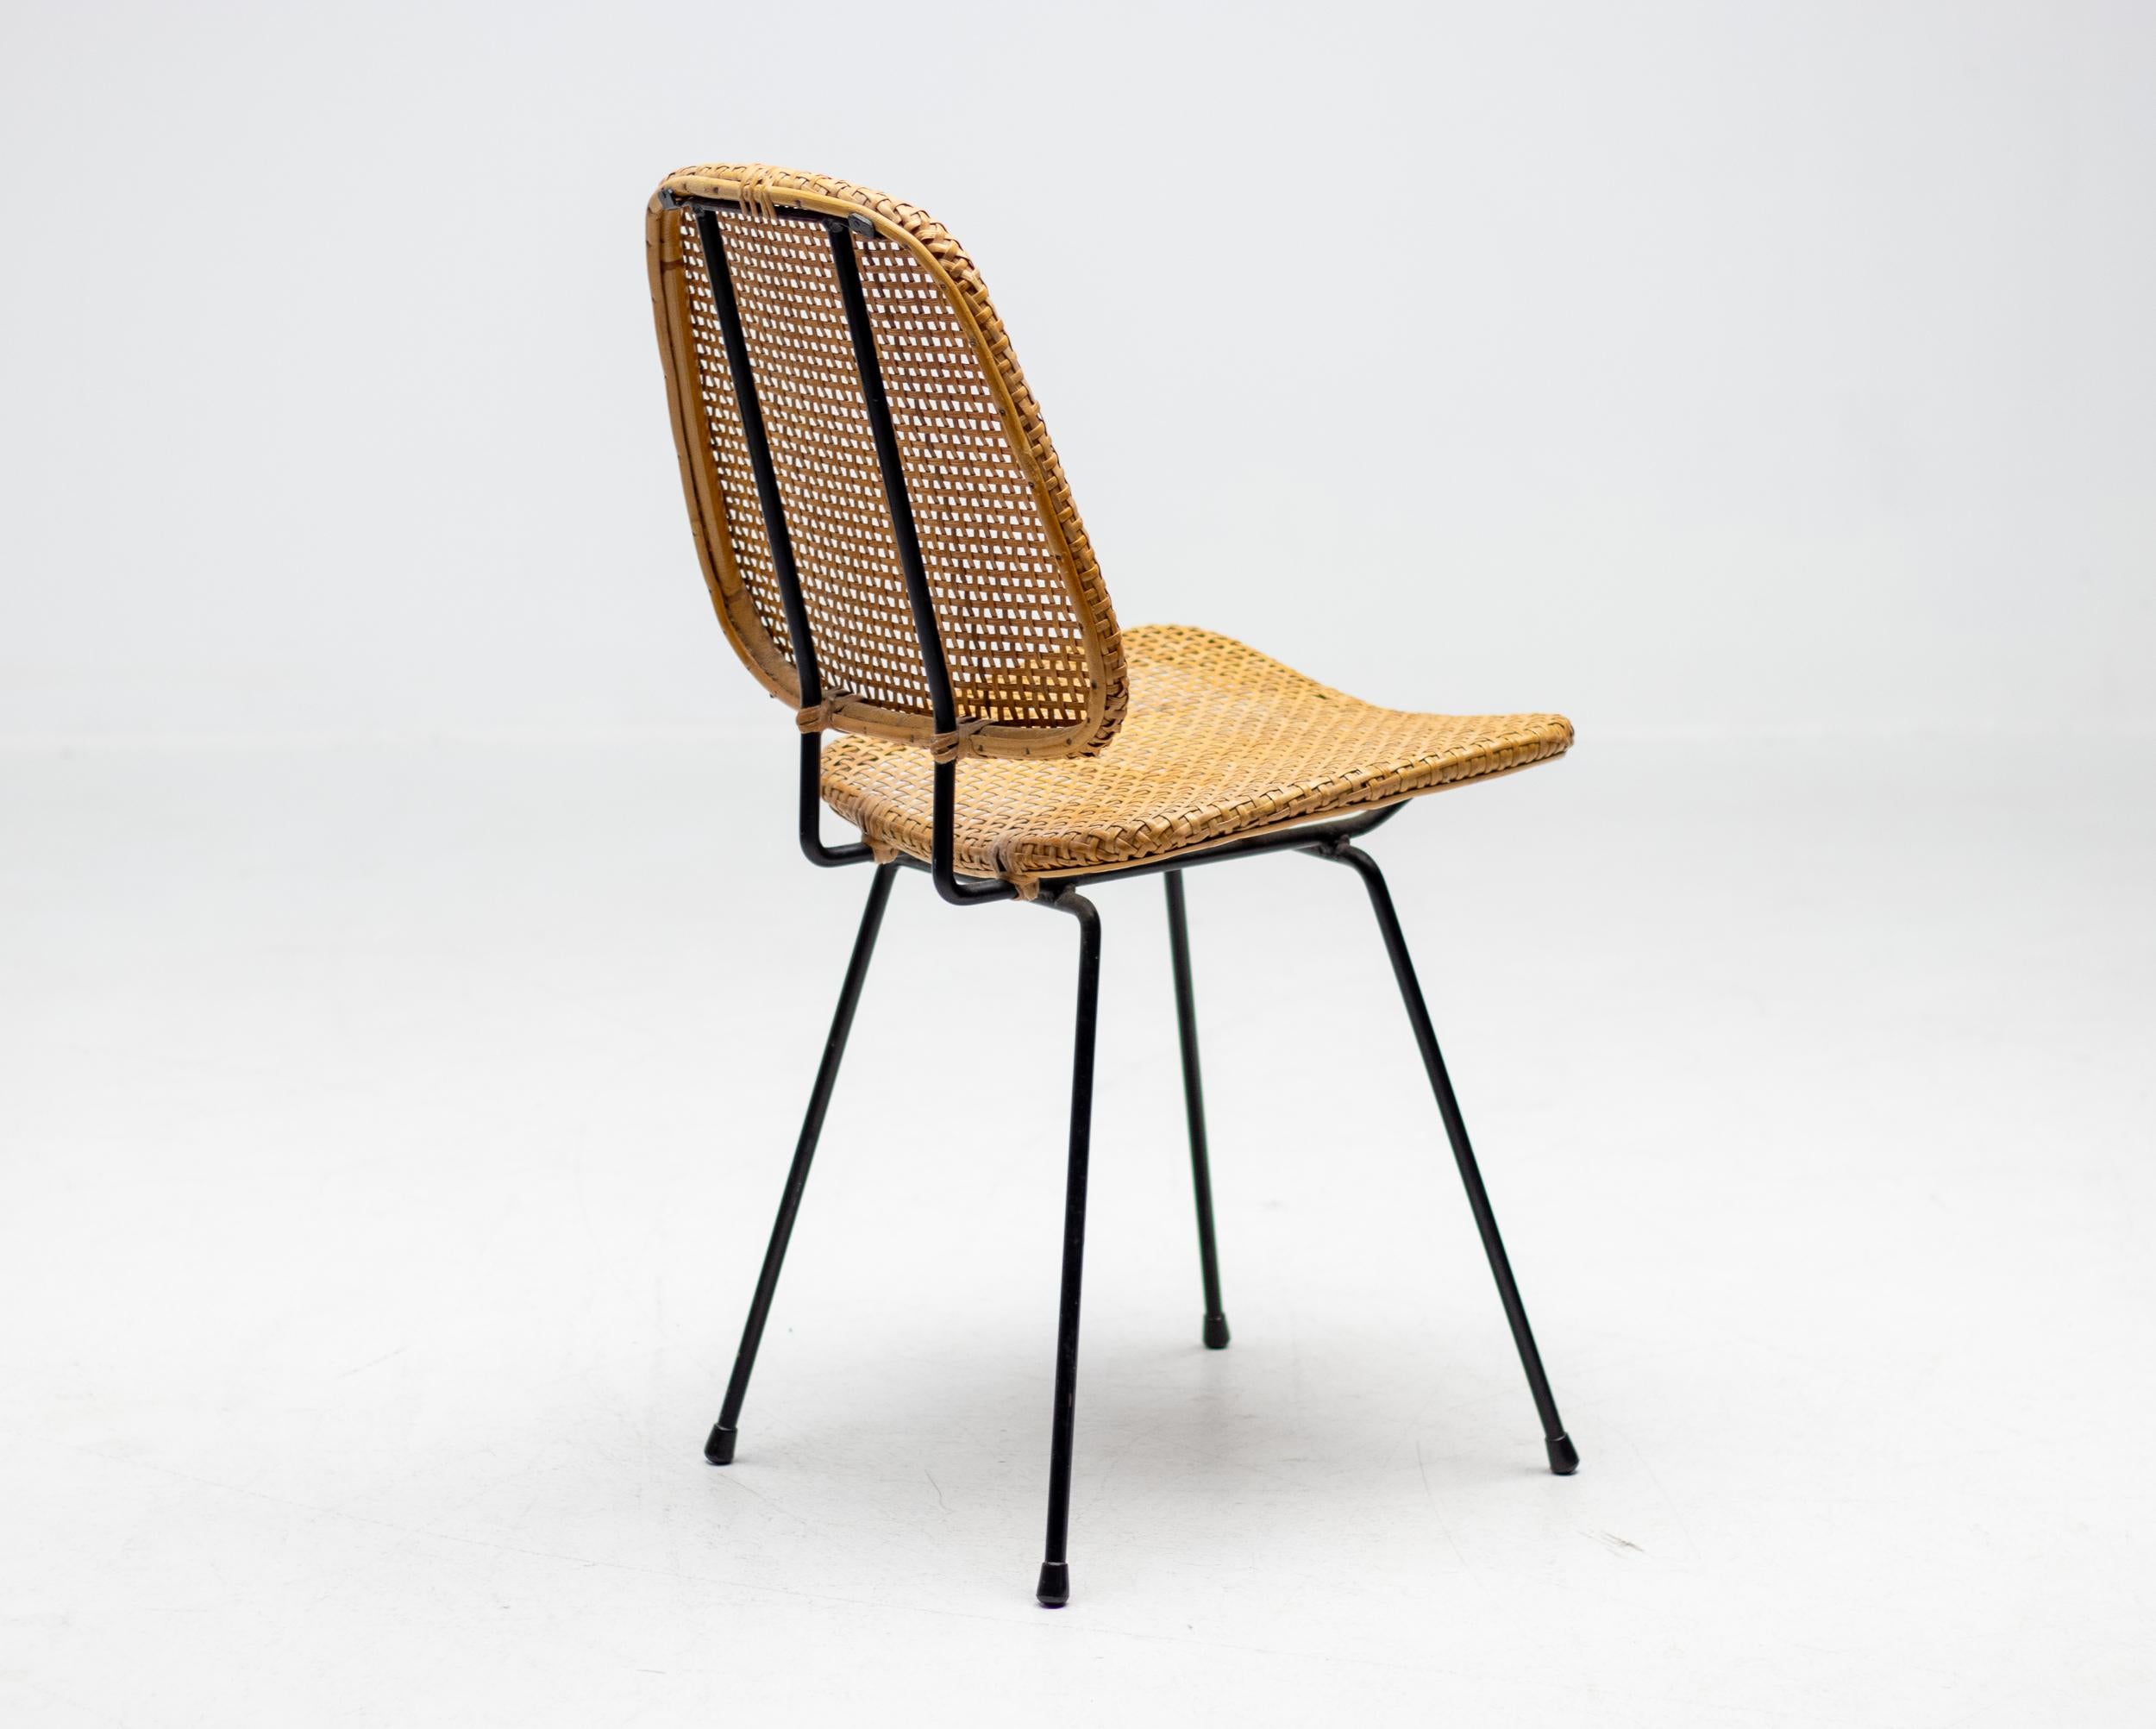 Steel Elegant Italian Cane Side Chairs For Sale